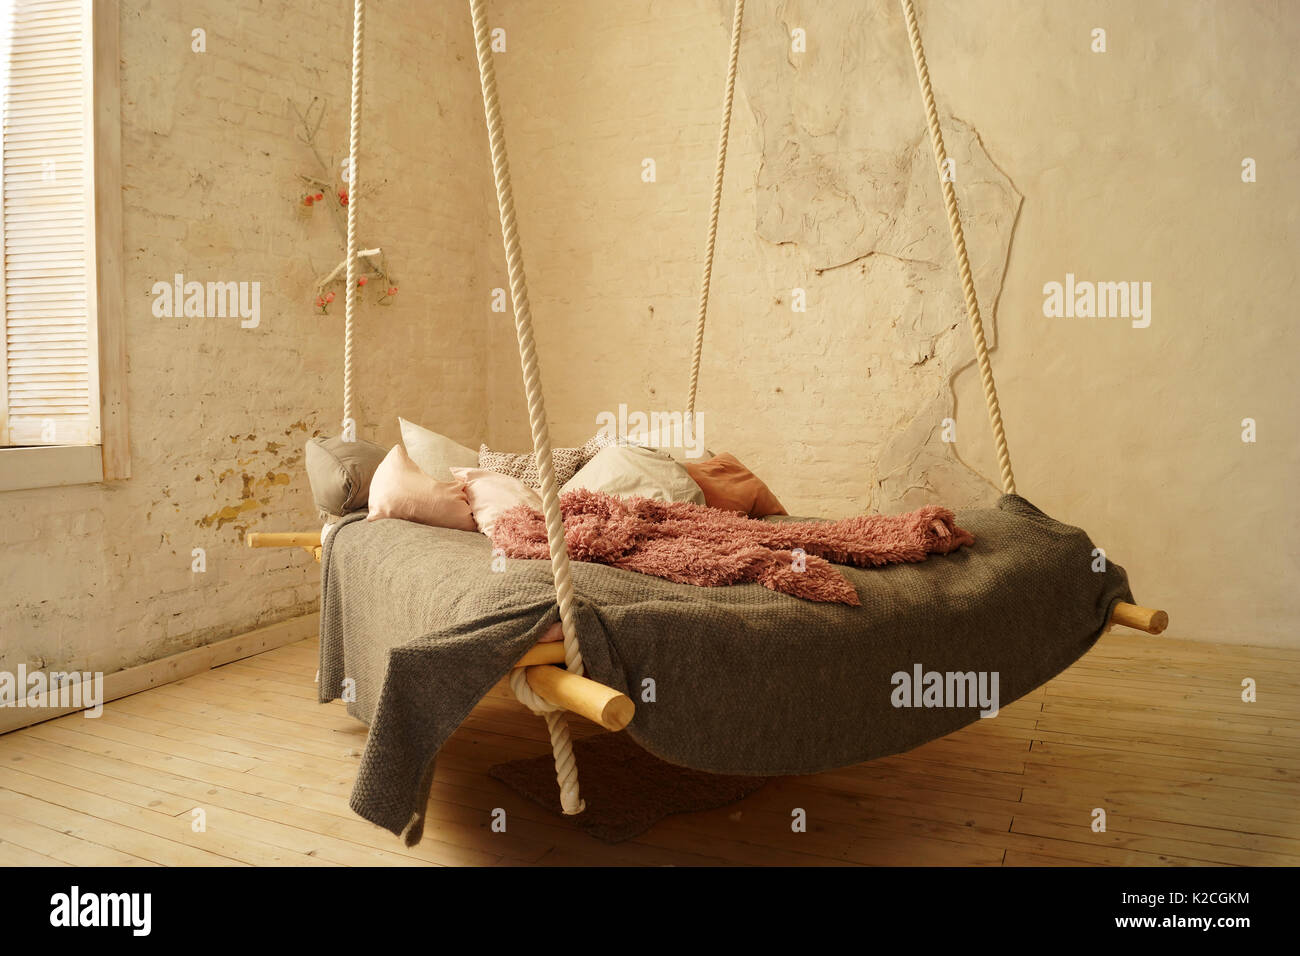 Hanging bed in rural or loft bedroom interior. Stock Photo